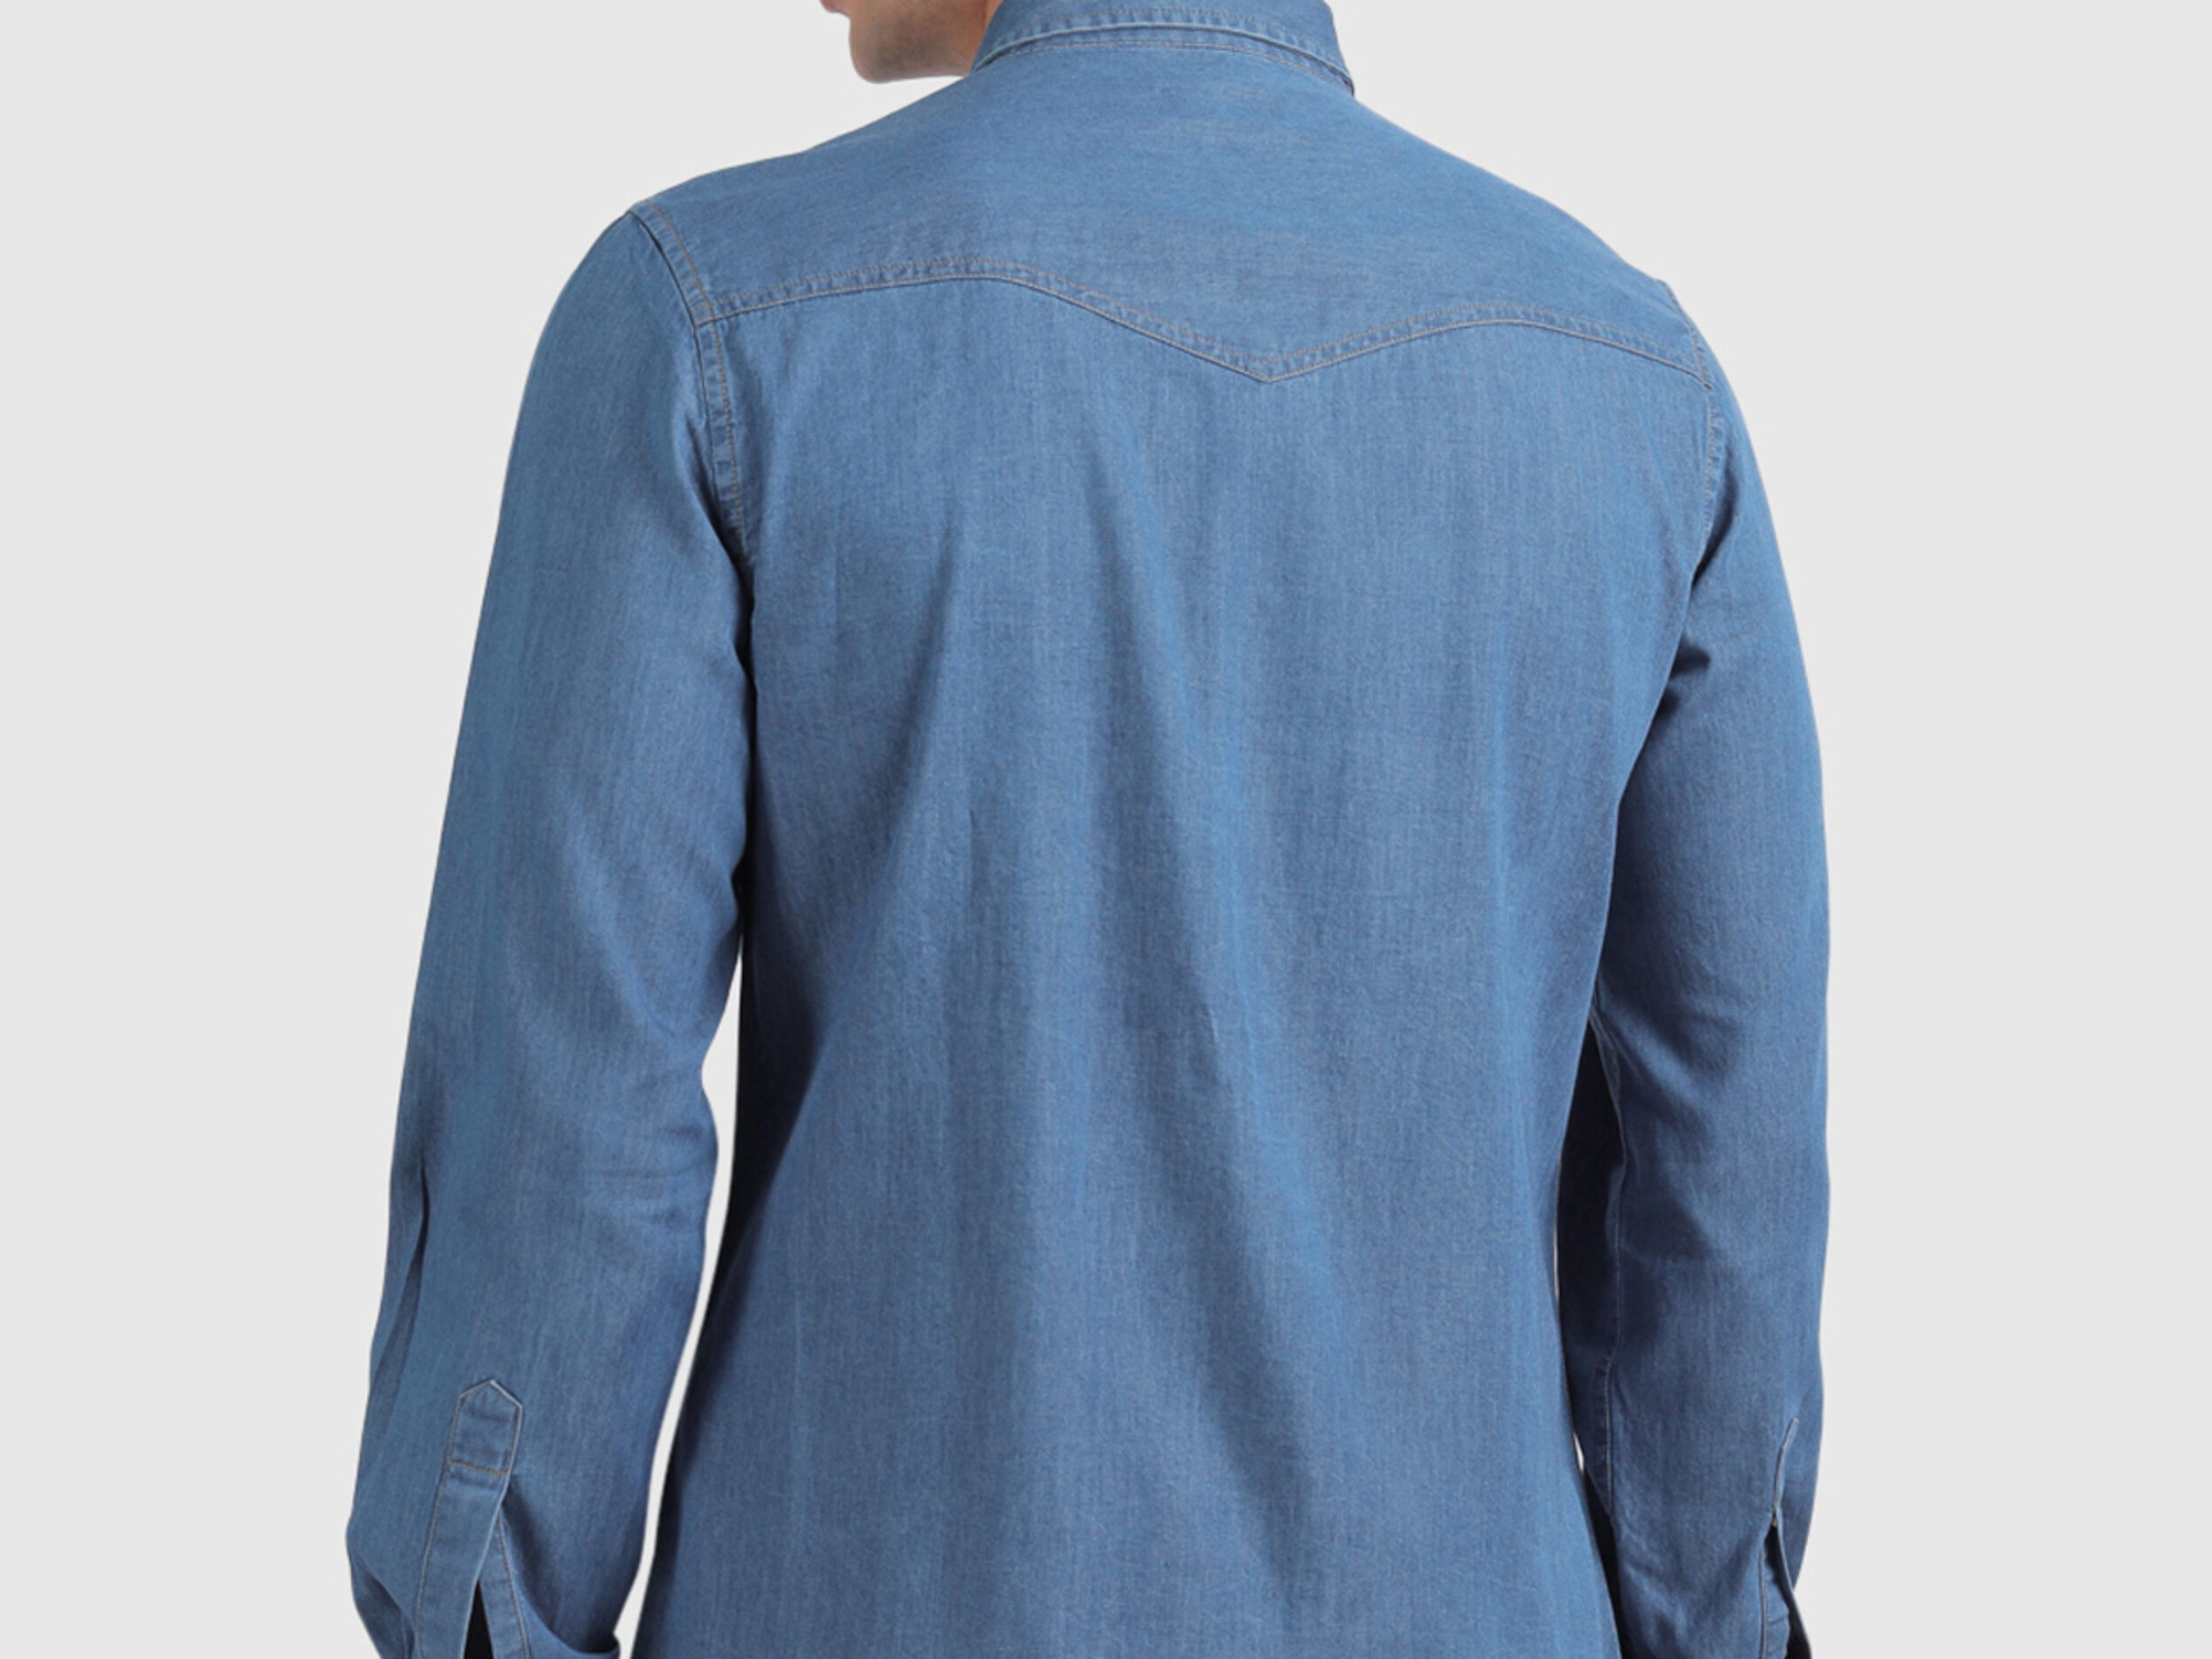 Buy United Colors of Benetton Blue Denim Jacket online